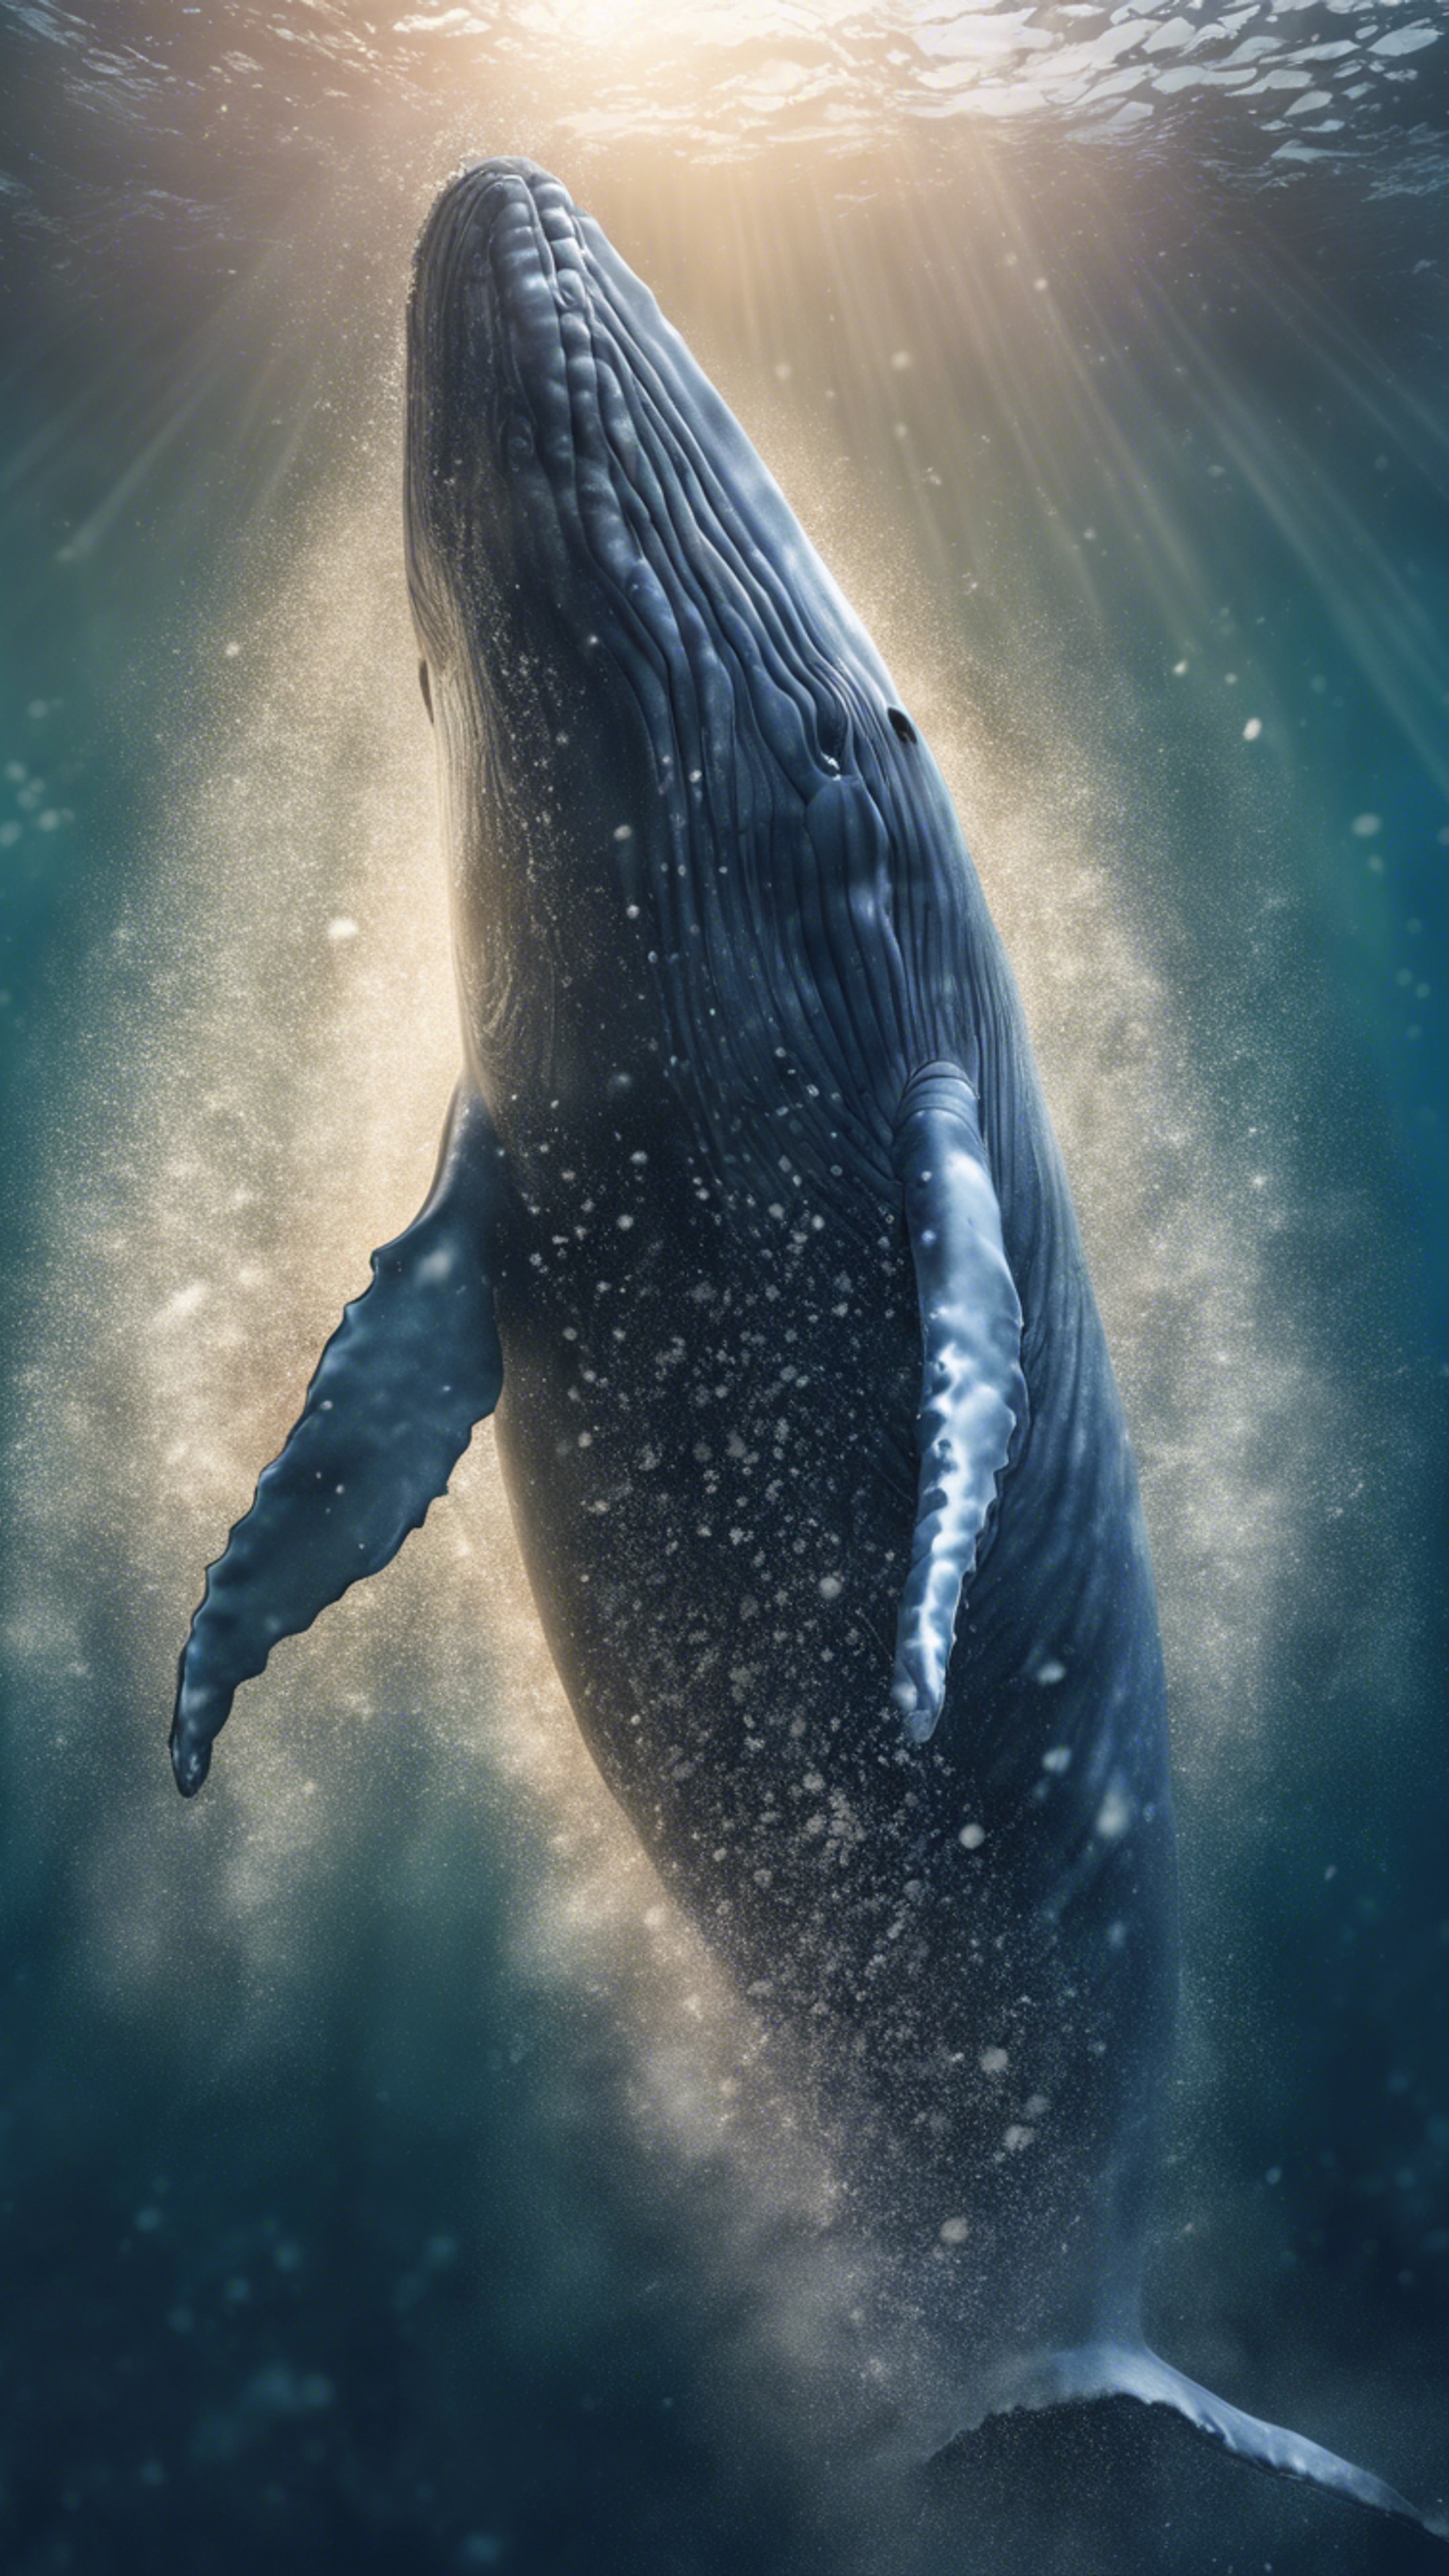 A digital portrait of a majestic sperm whale deep below the ocean waves. Tapeta na zeď[e5d10afbe32a416ca5b5]